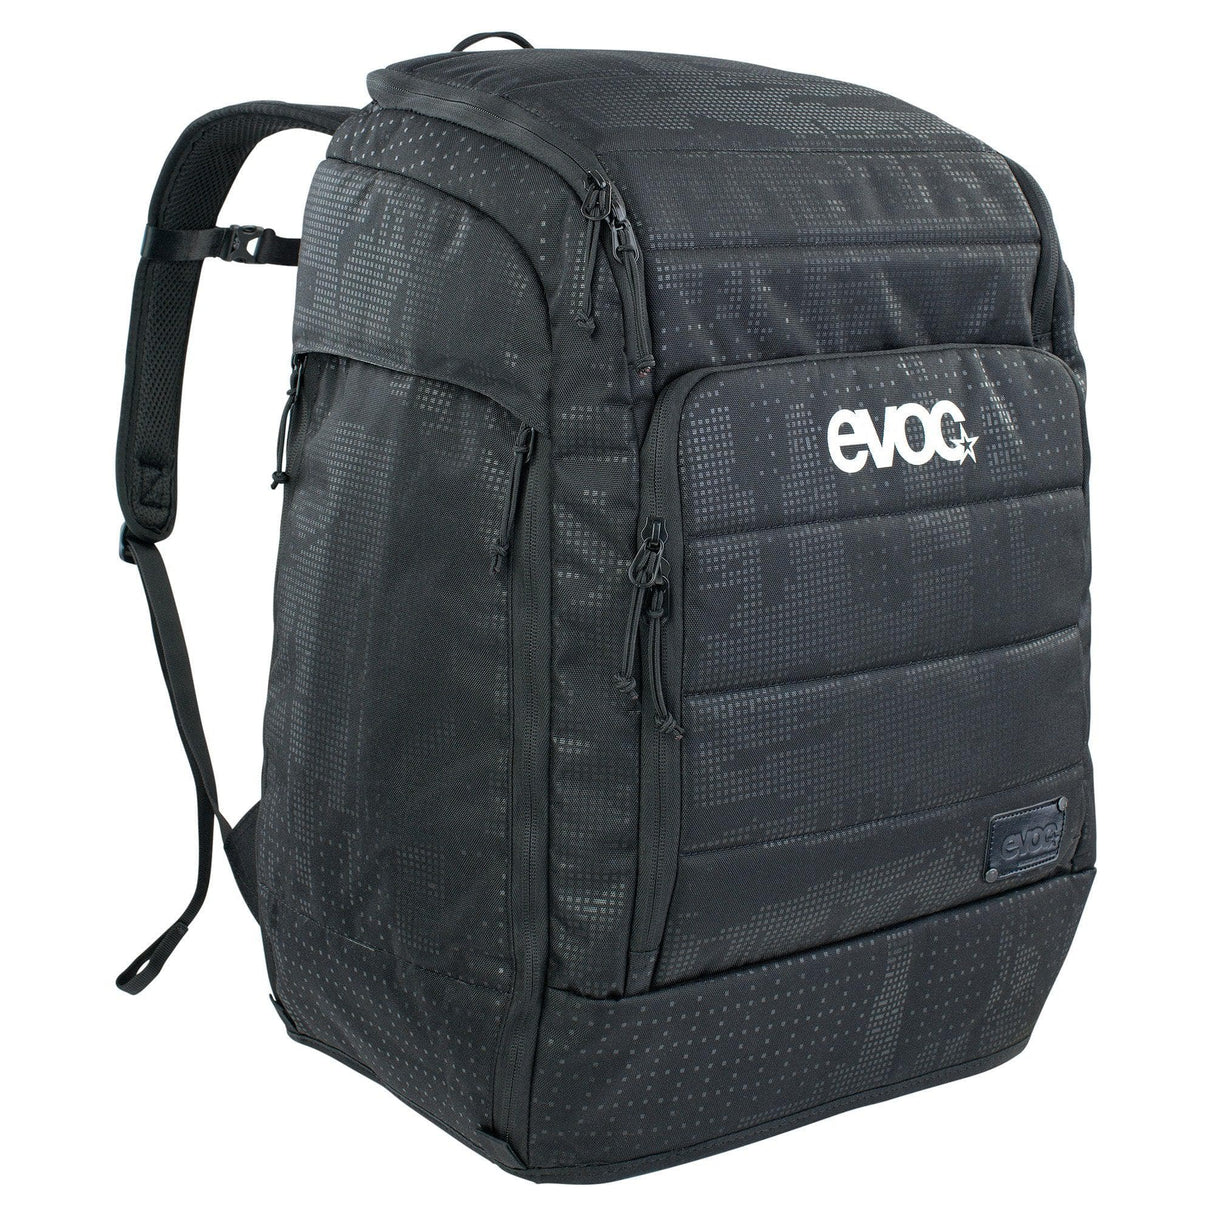 Evoc Gear Backpack 60L 2021: Black 60L